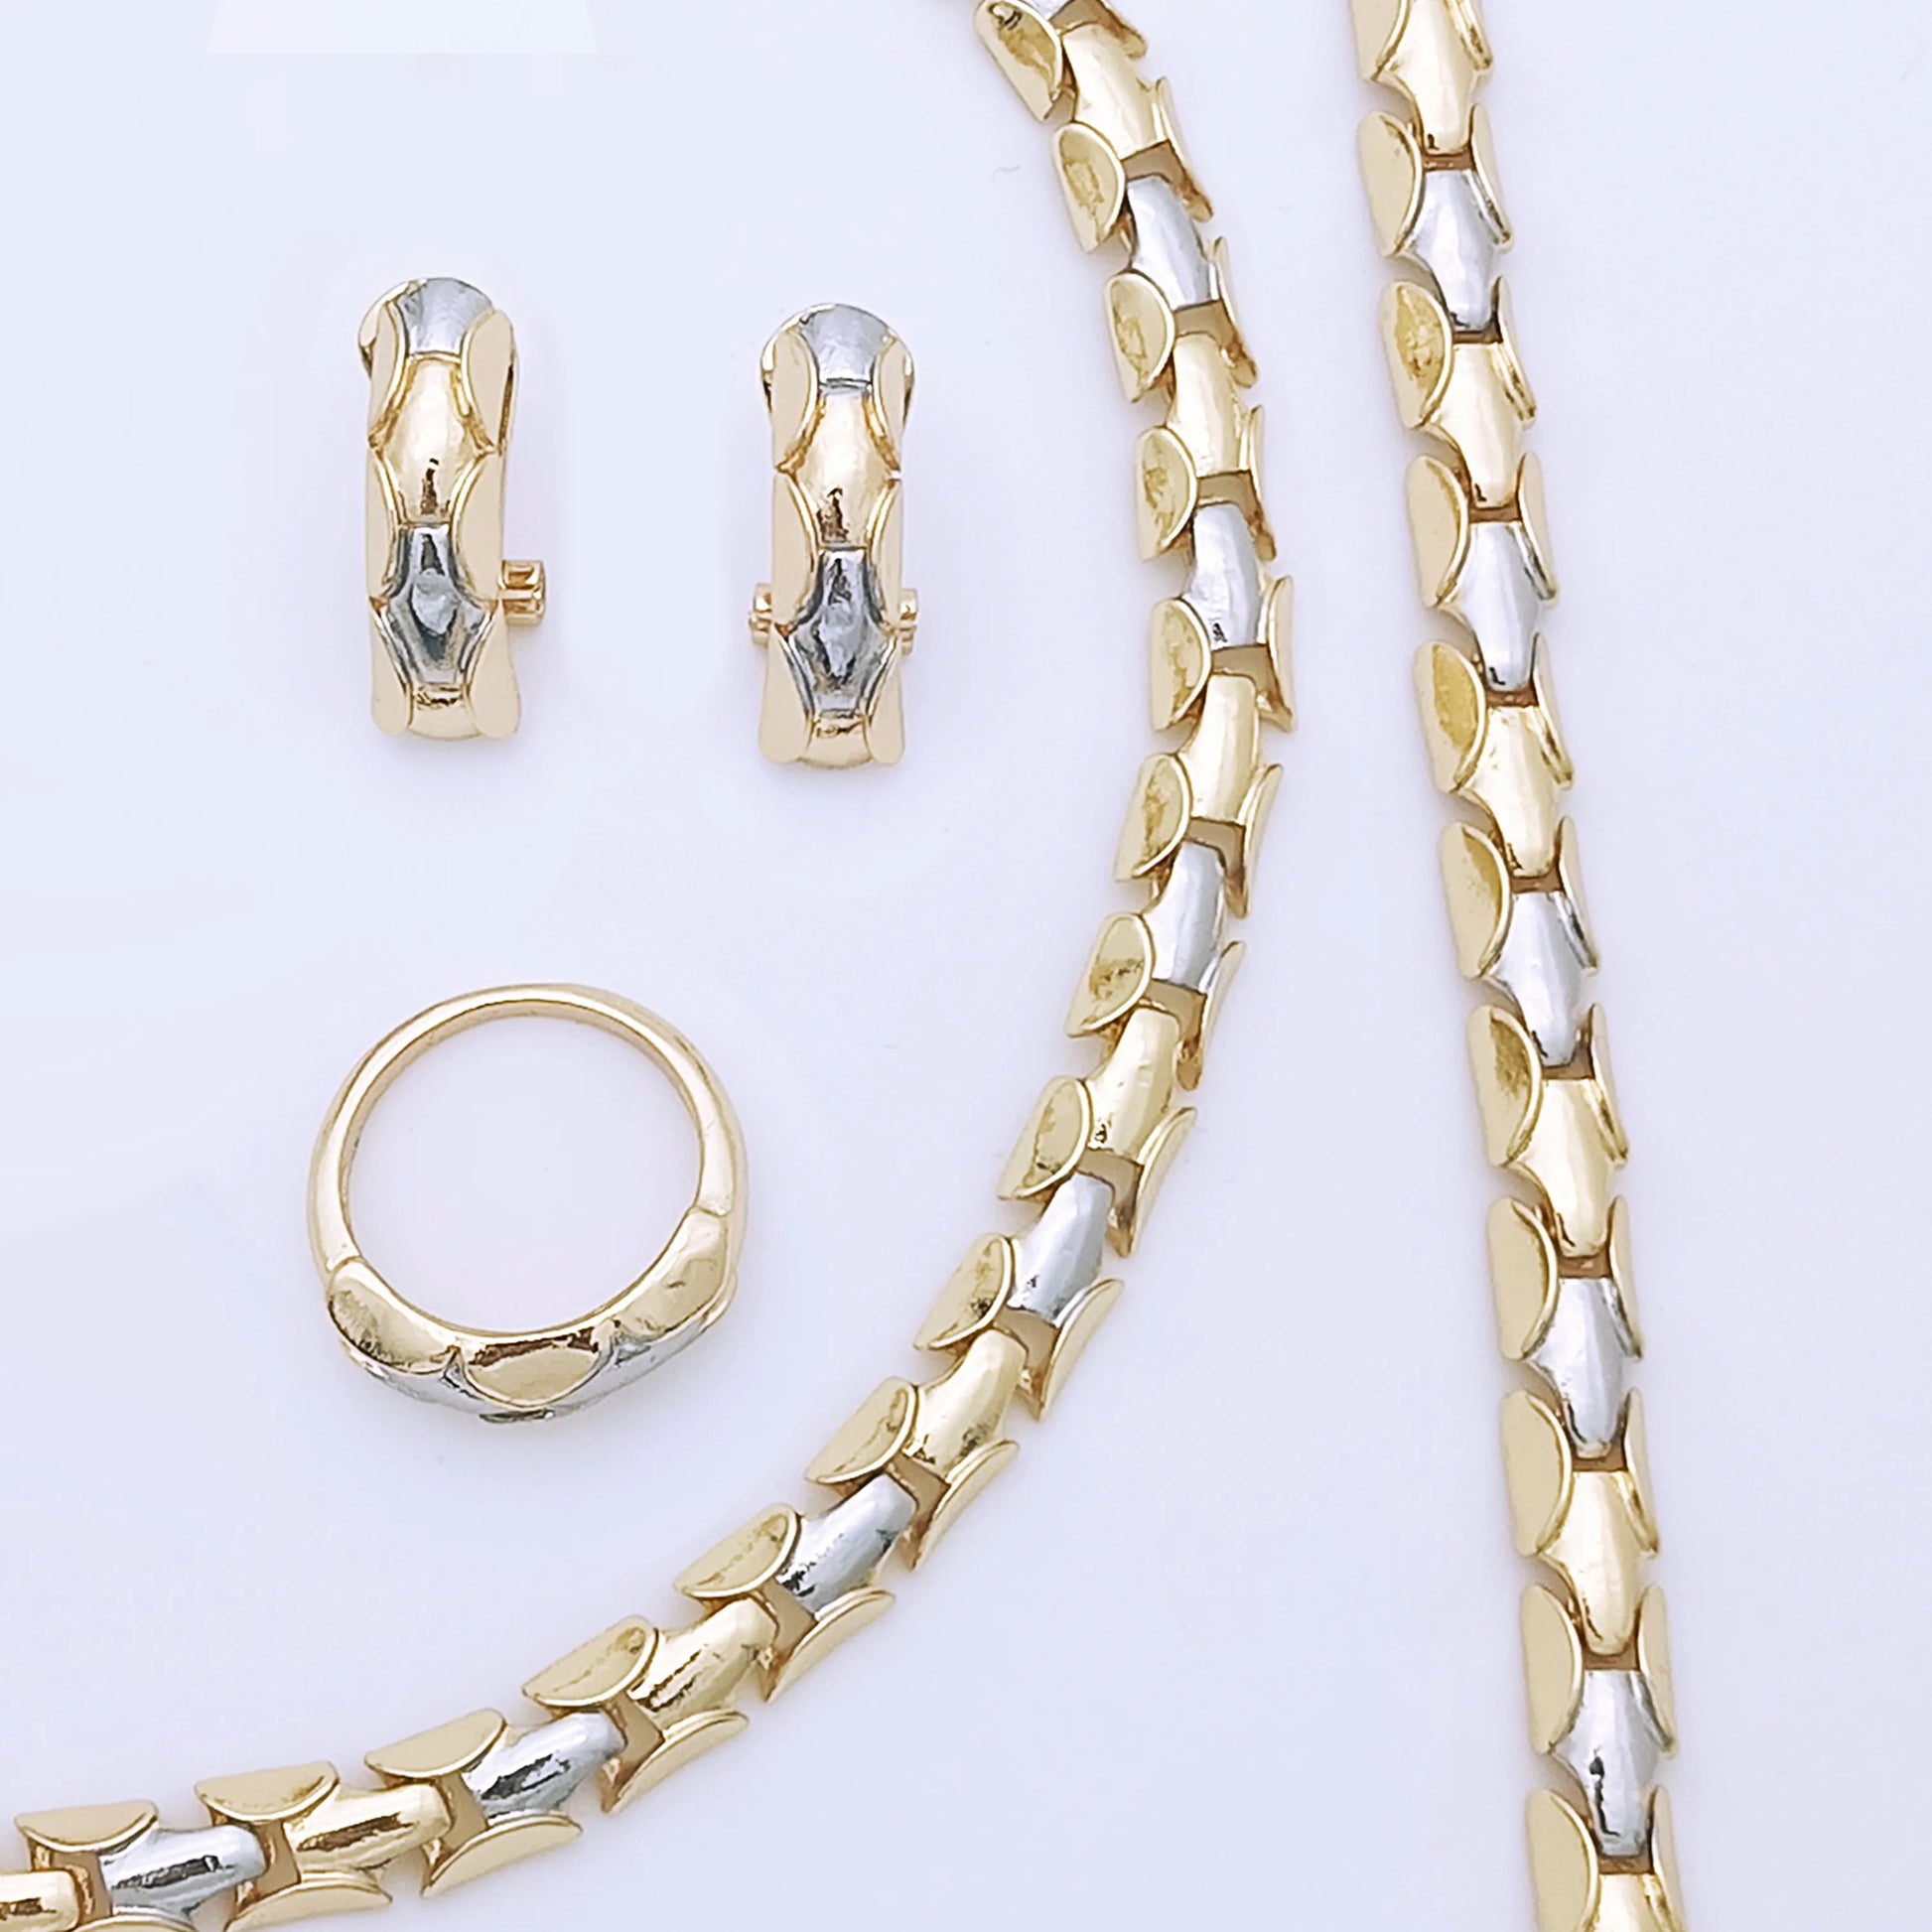 Italian Brazilian Jewelry Set Wedding Jewellery 18k Gold Plated Necklace For Women Daily Wear Fashion Bride Accessories Gifts - TaMNz